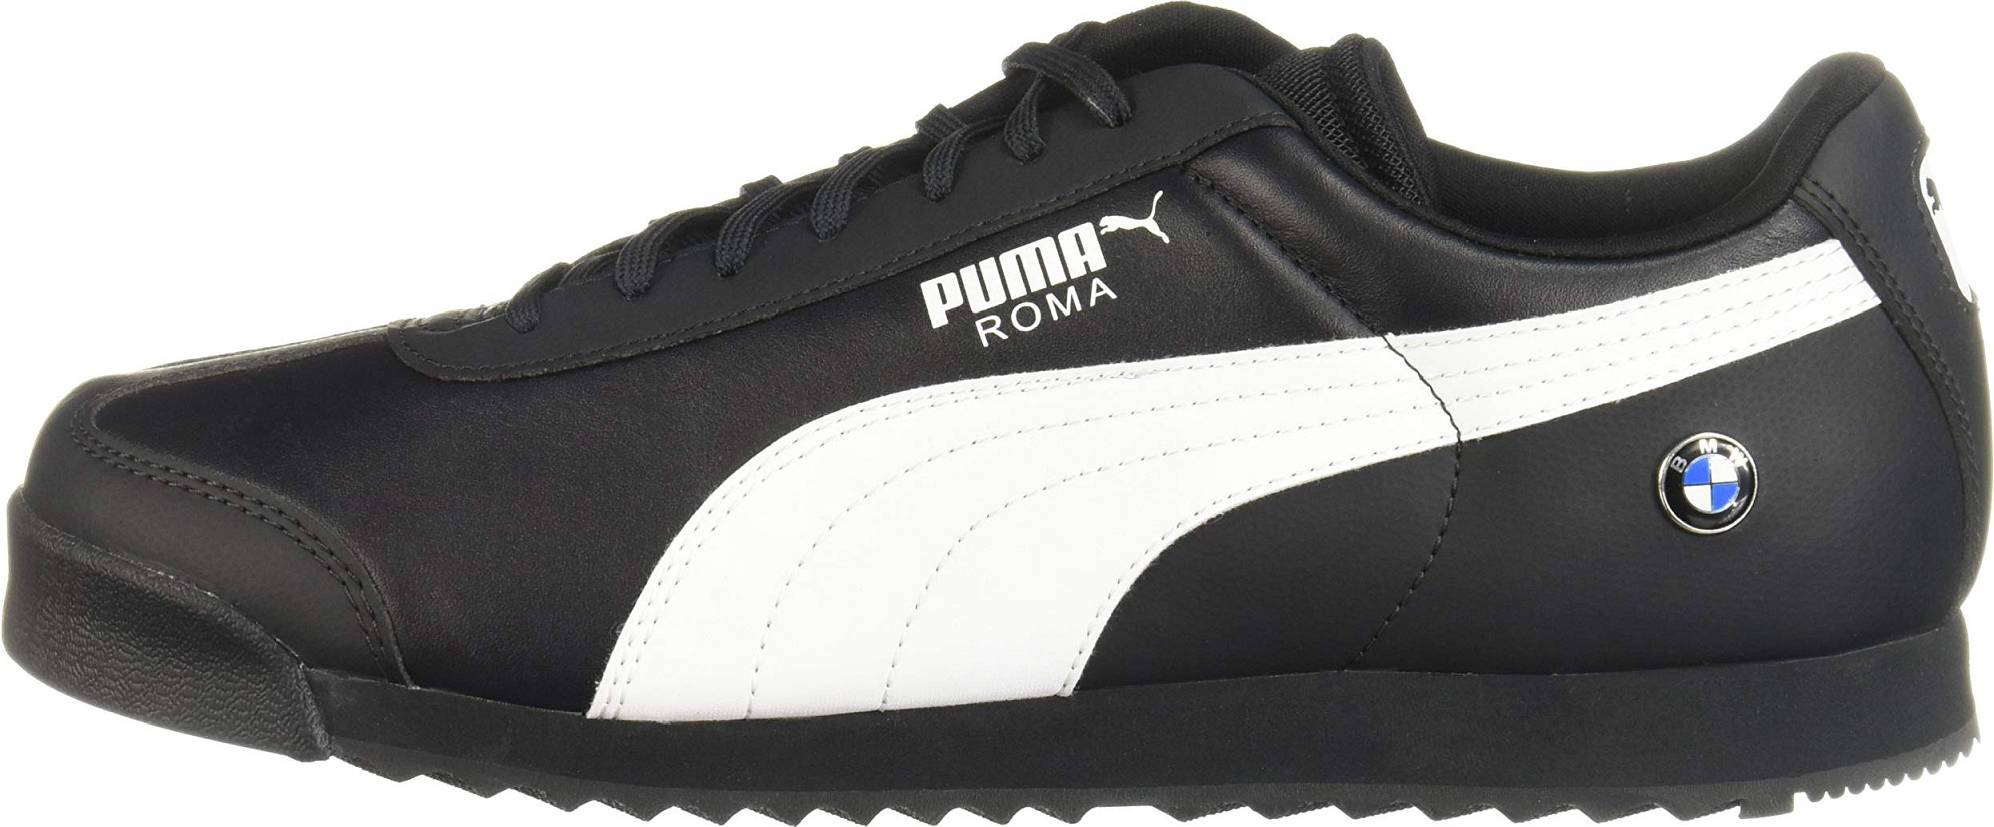 Puma BMW MMS Roma – Shoes Reviews & Reasons To Buy